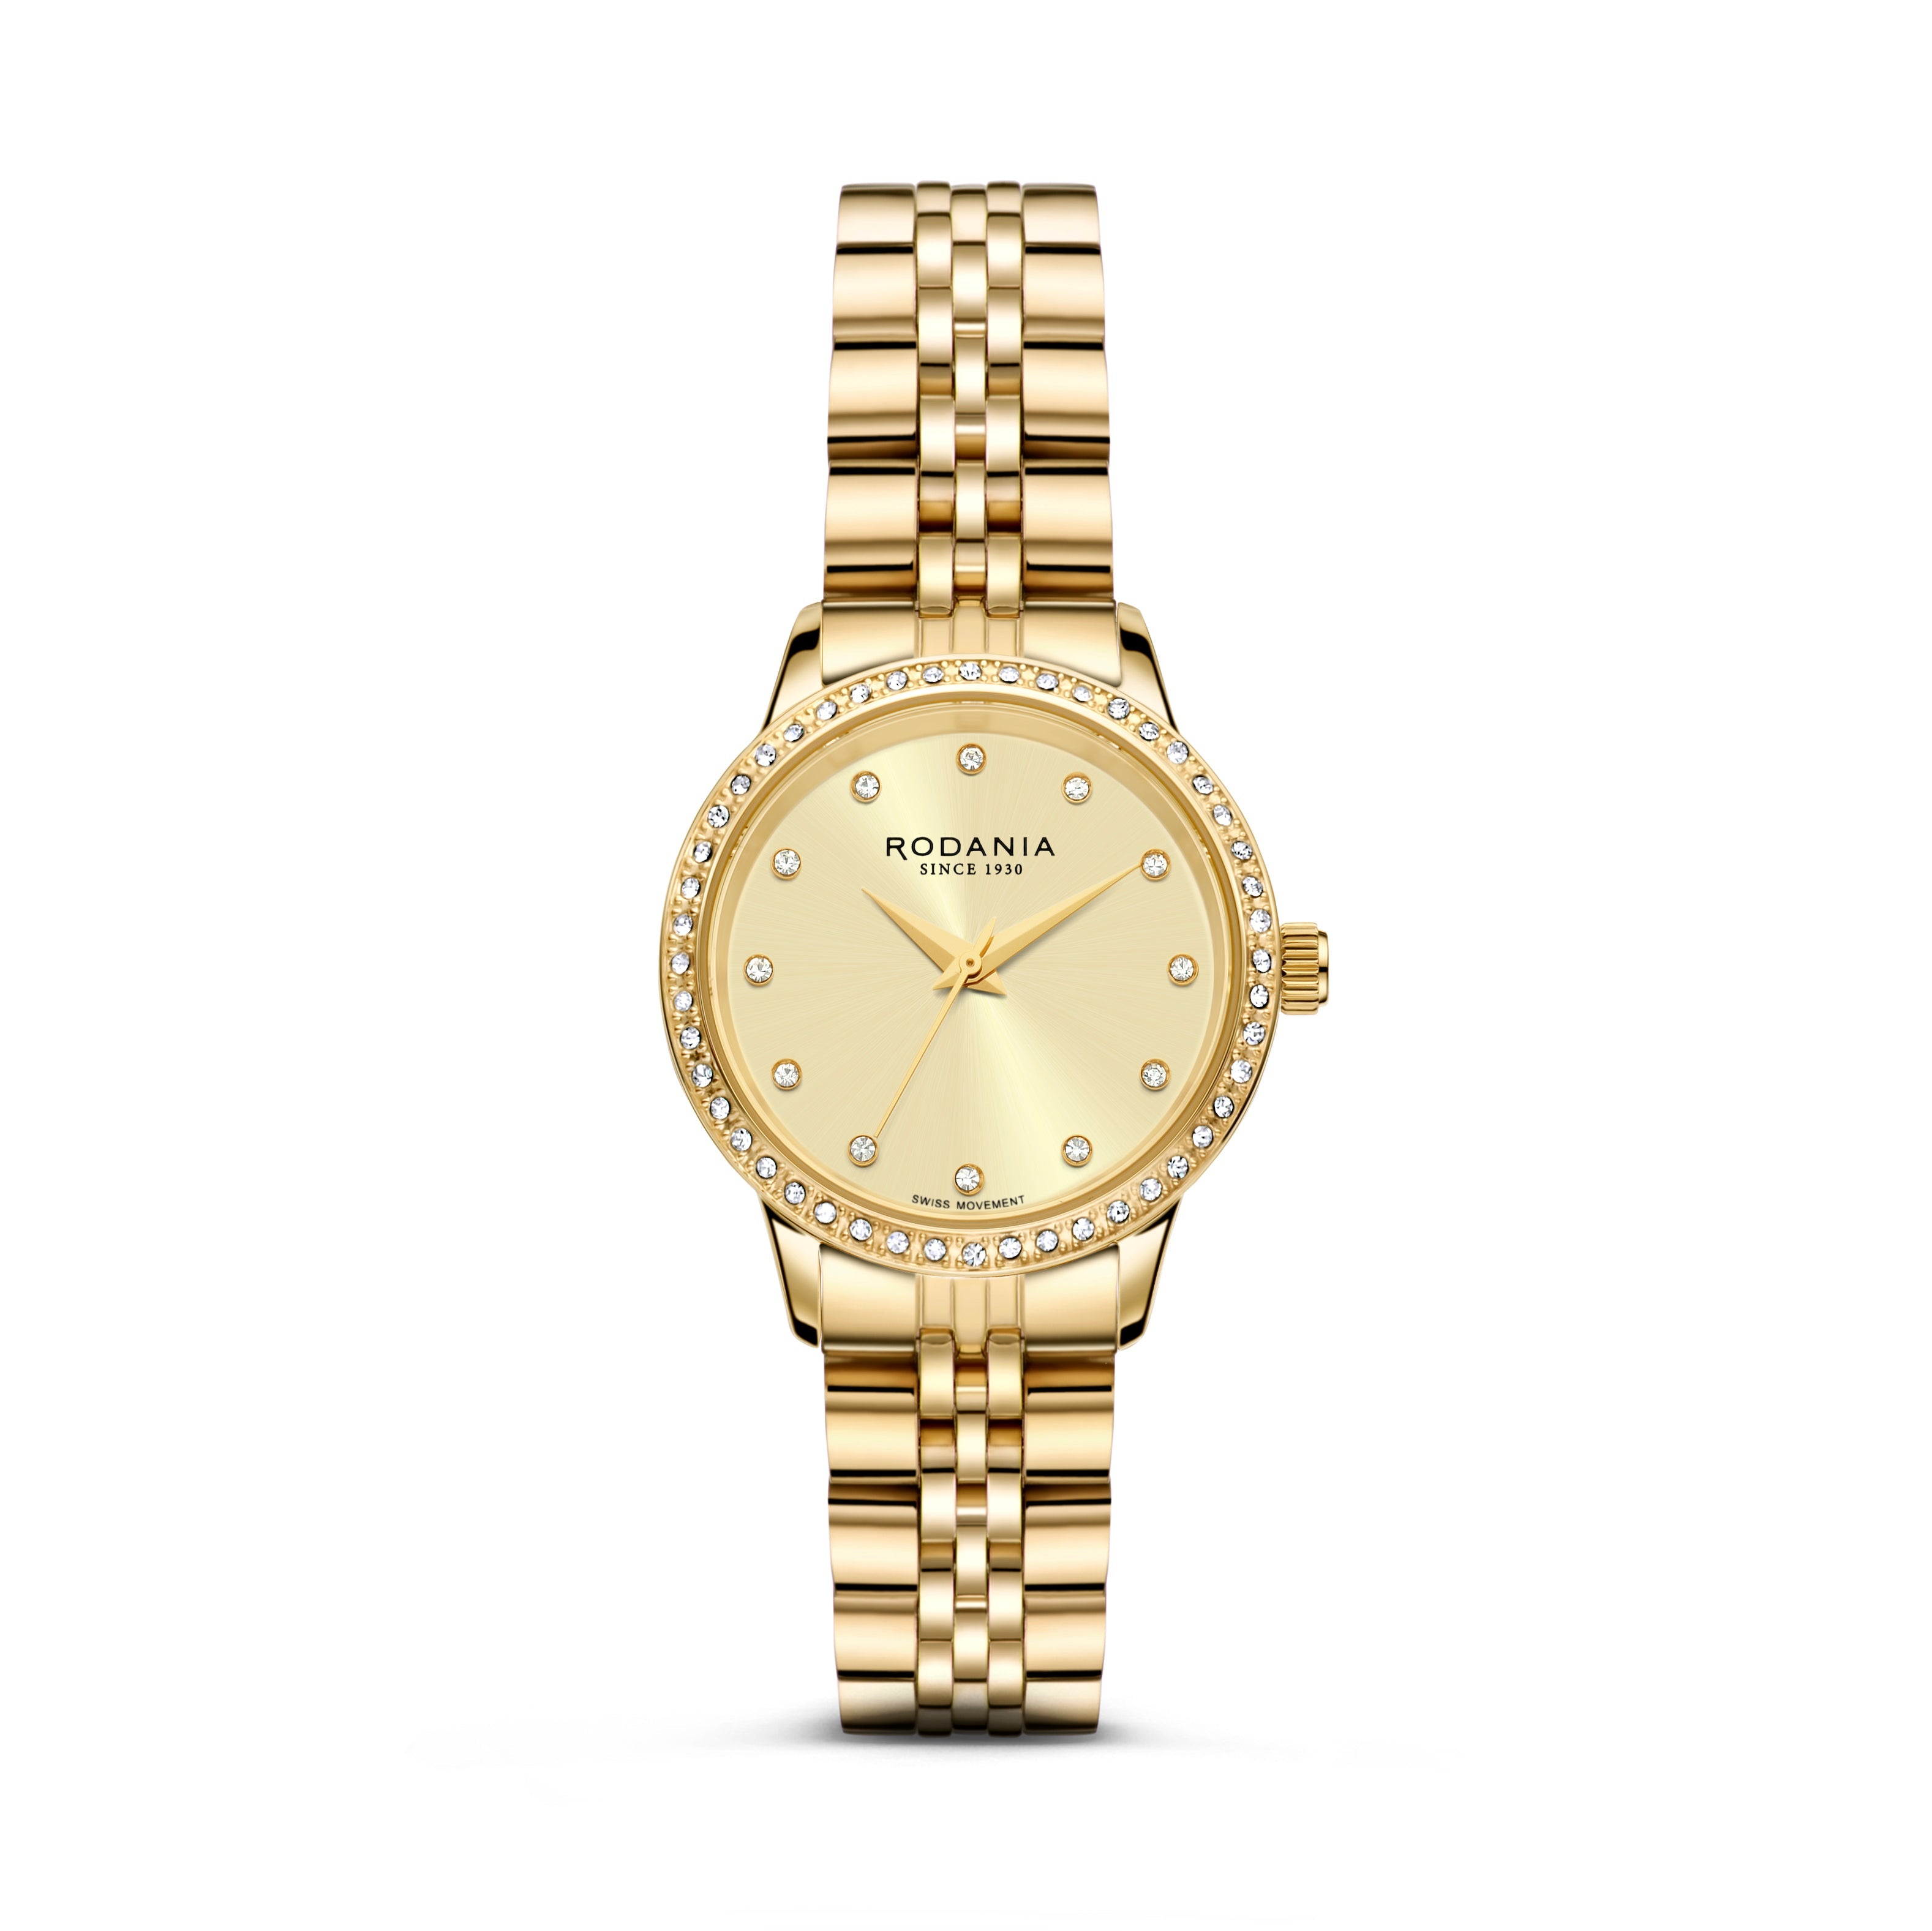 RODANIA Automatic Gold Filled Cal.2824 Swiss Vintage Men's Watch 37mm Case  | eBay